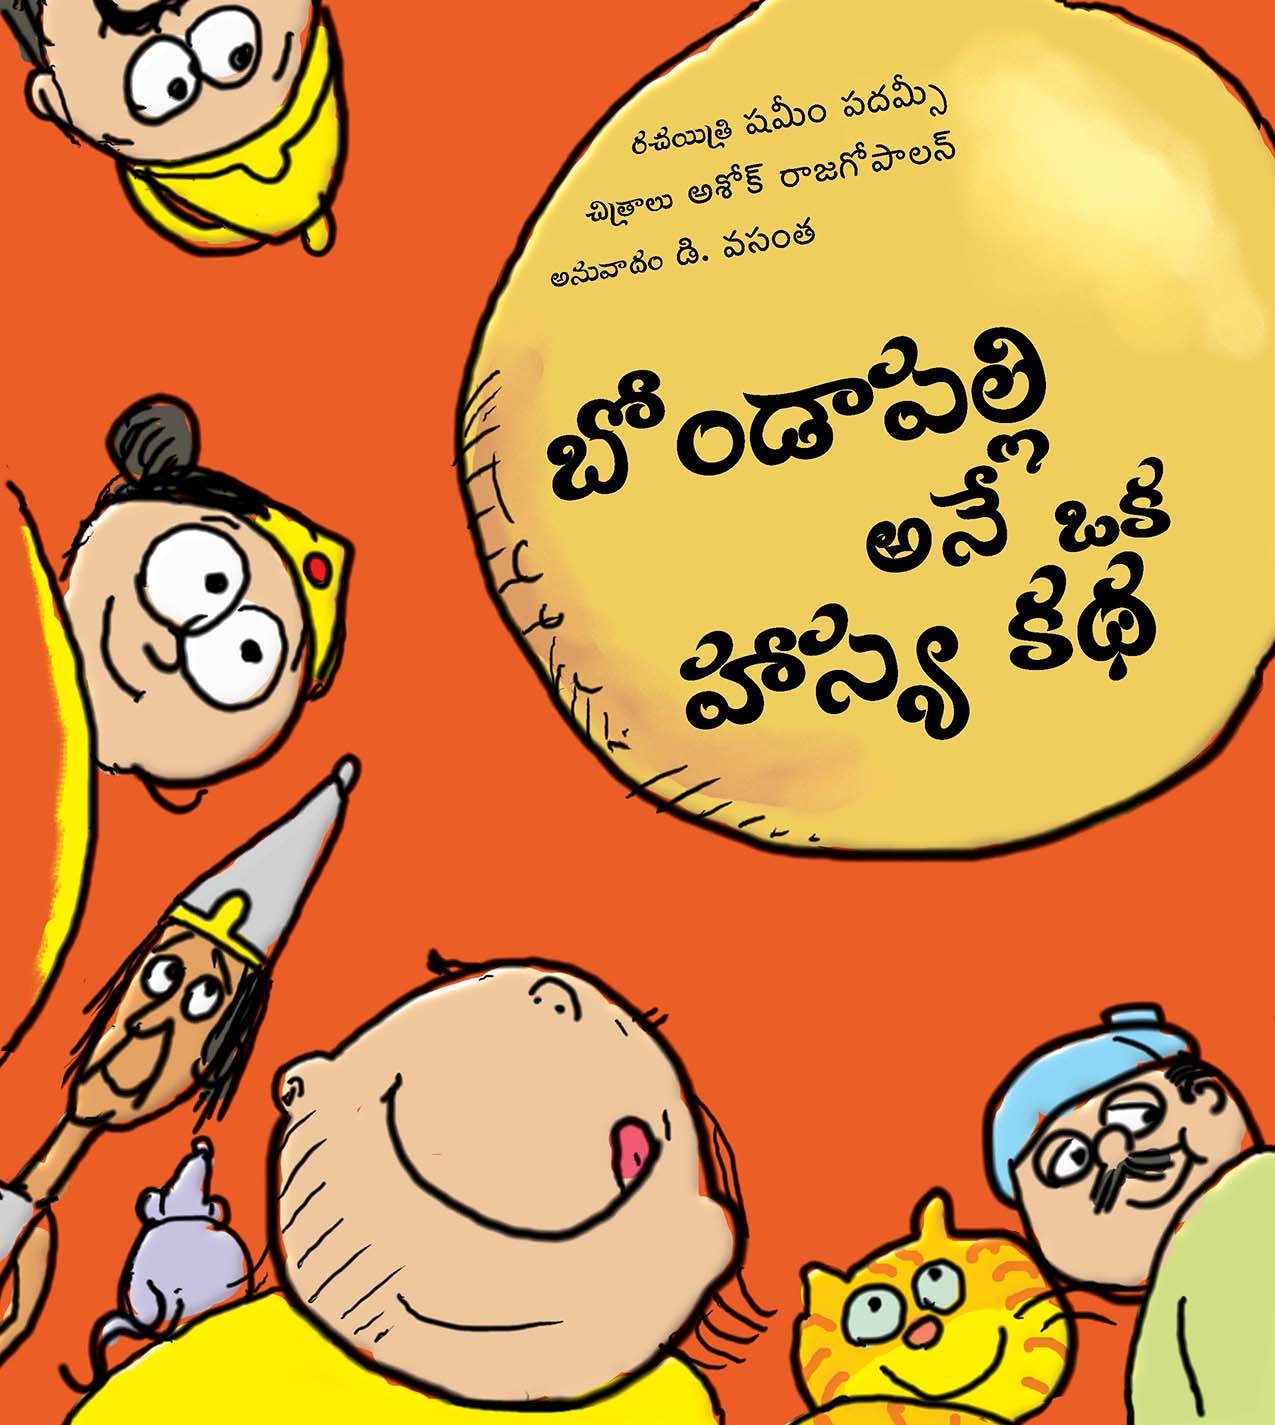 A Silly Story Of Bondapalli/Bondapalli Ane Oka Haasya Katha (Telugu)